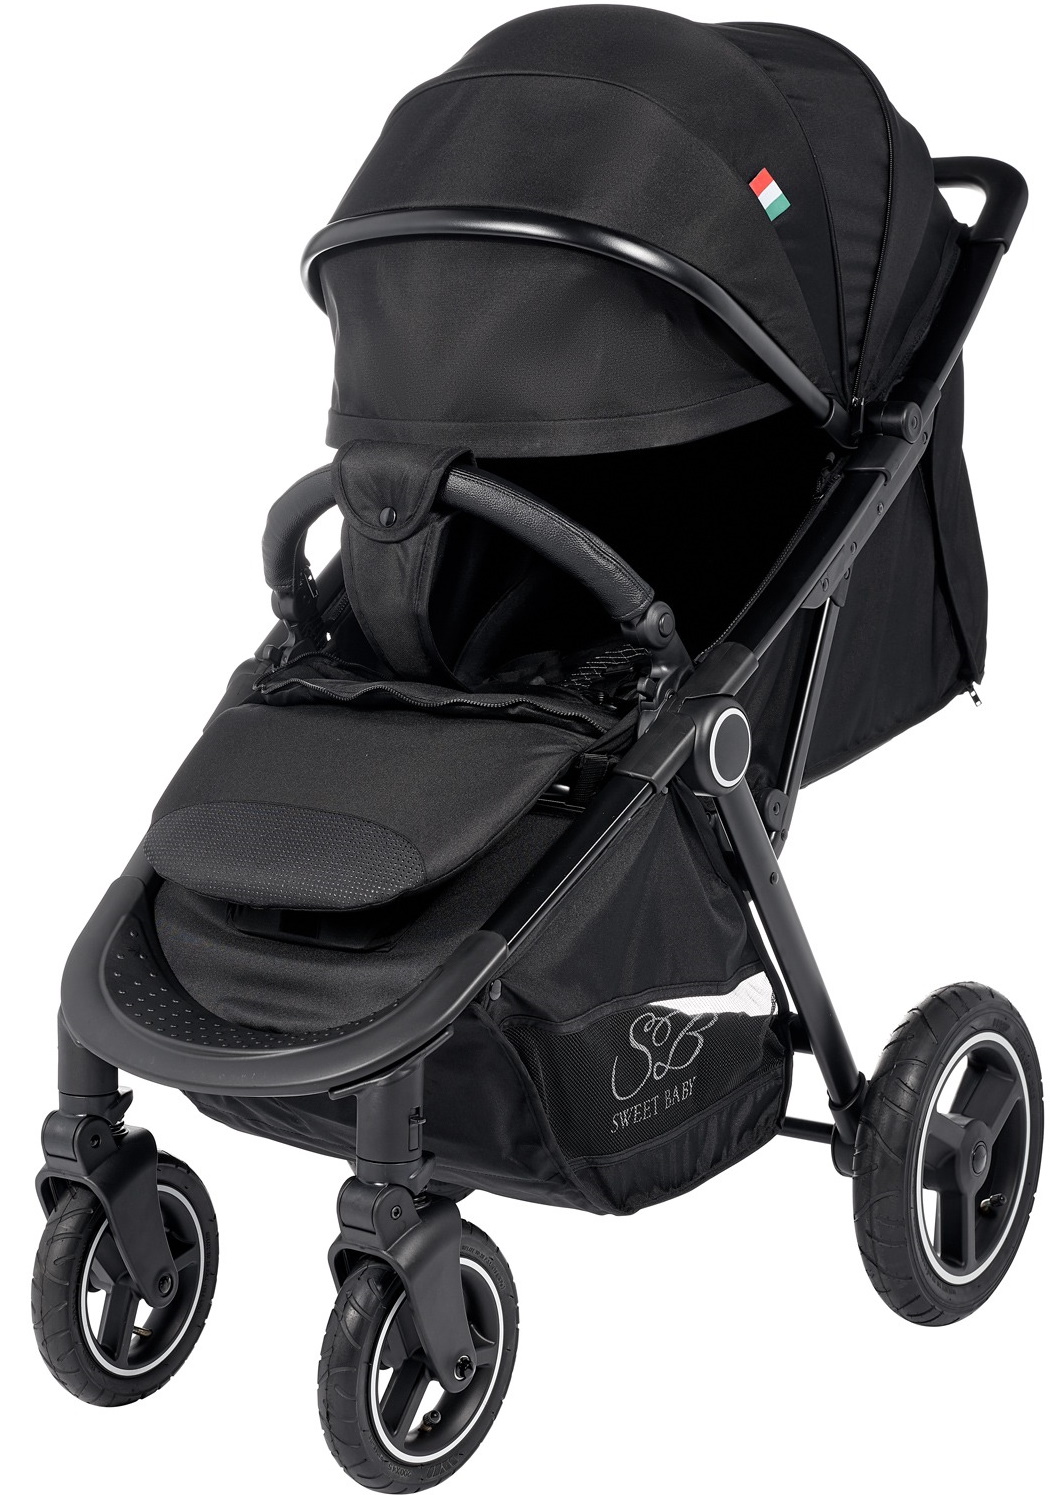 Прогулочная коляска Sweet Baby Suburban Compatto Air, цвет: черный прогулочная коляска sweet baby compatto blue neo 426747